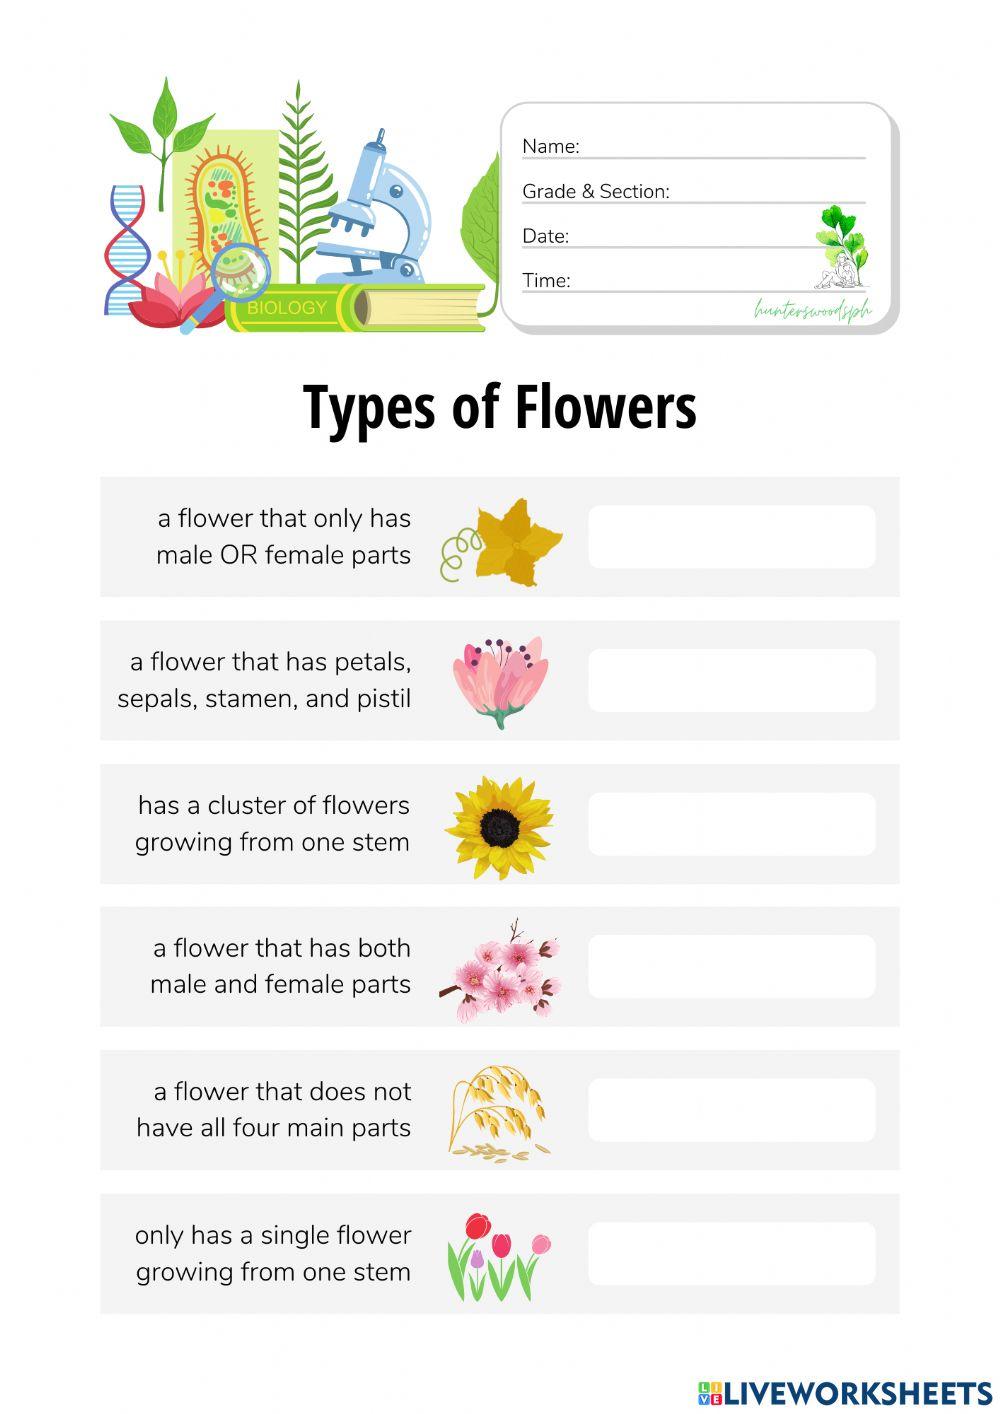 Types of Flowers - HuntersWoodsPH Biology